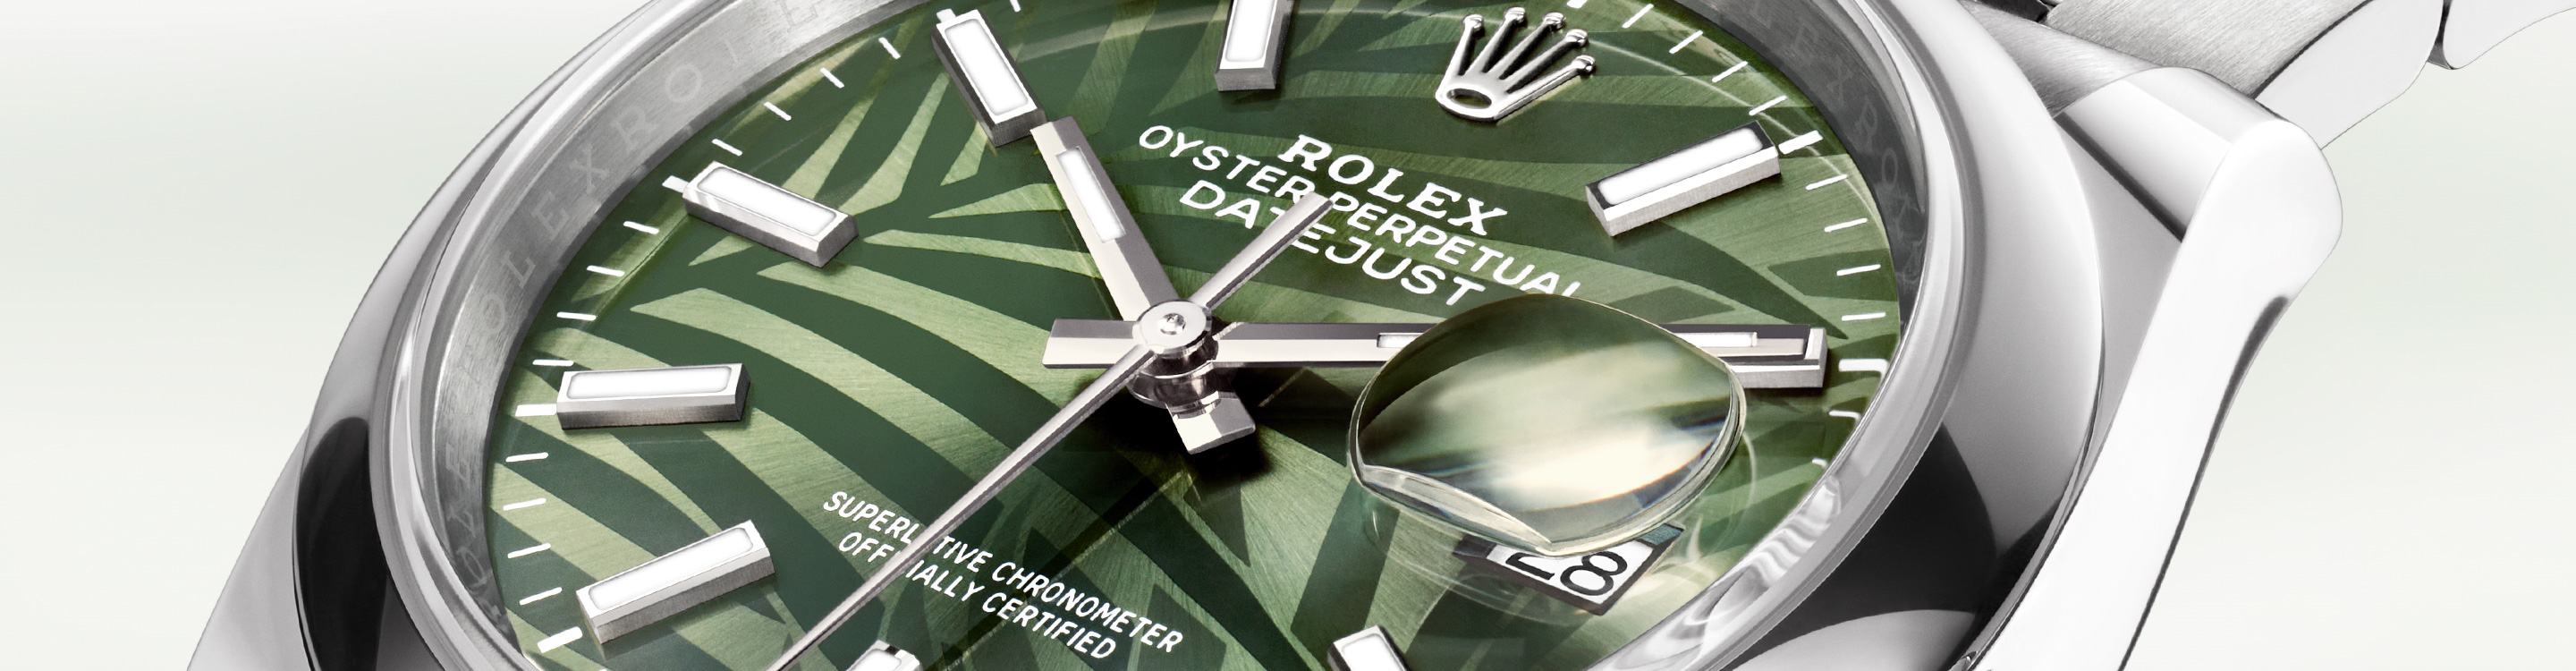 Reloj Rolex Oyster Perpetual en Joyería Grau